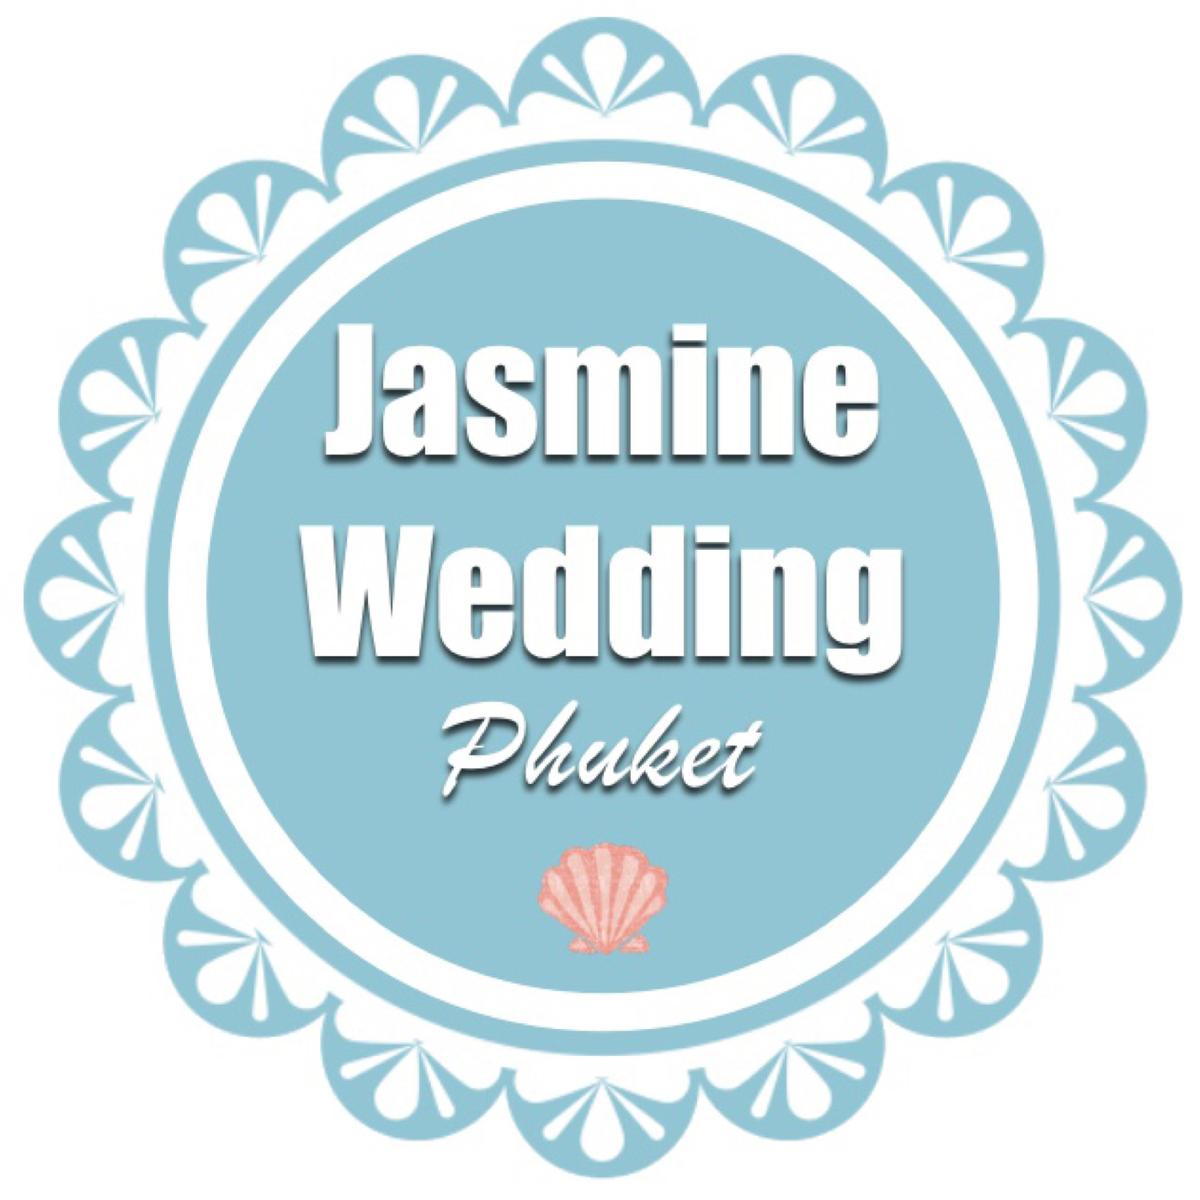 JasmineWedding